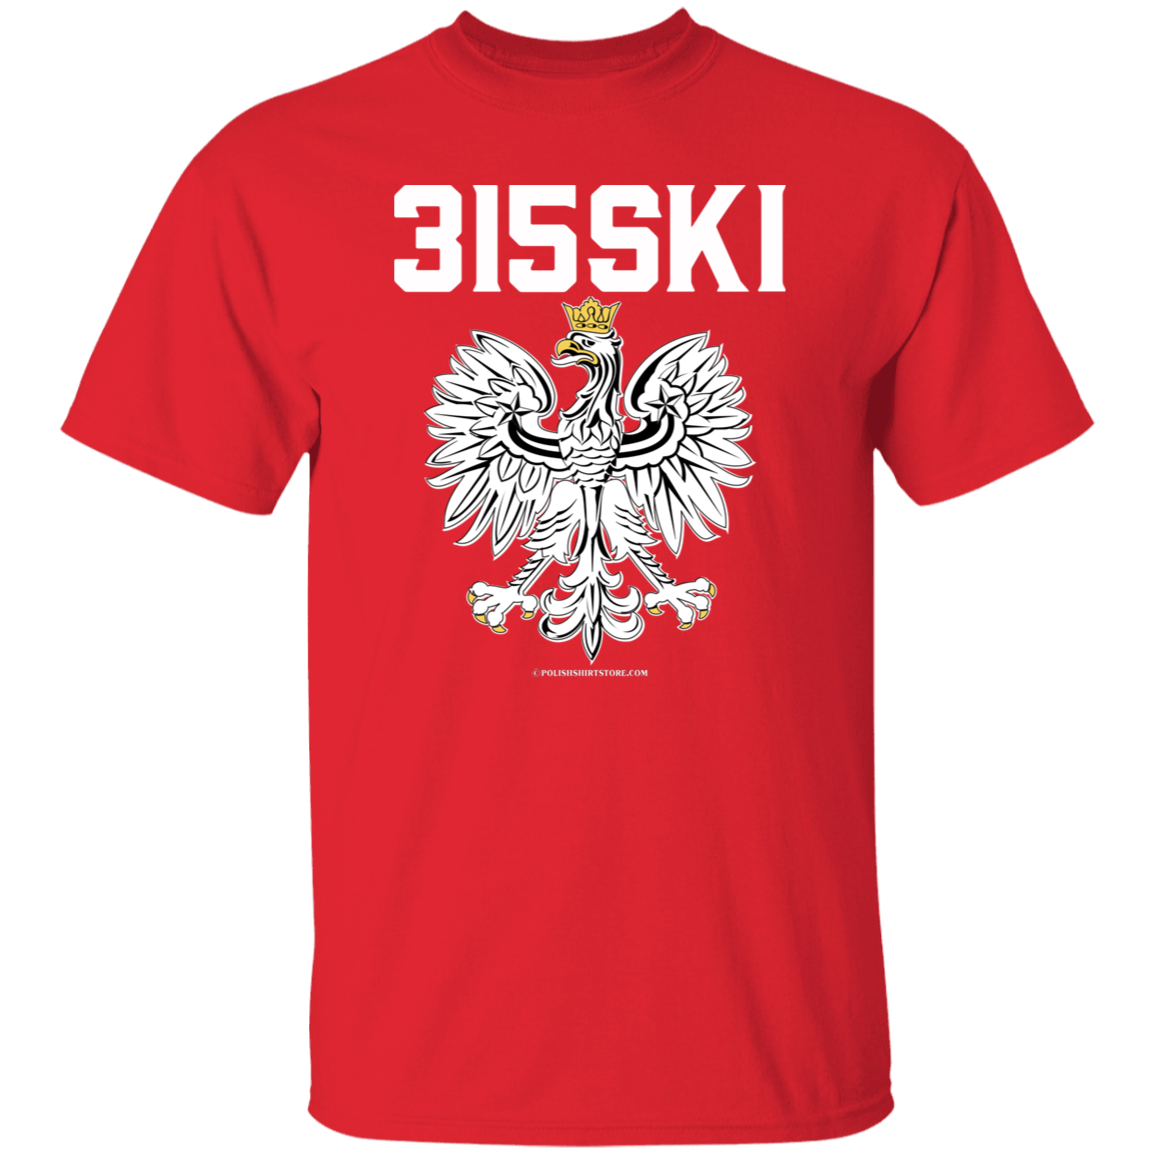 315SKI Apparel CustomCat G500 5.3 oz. T-Shirt Red S